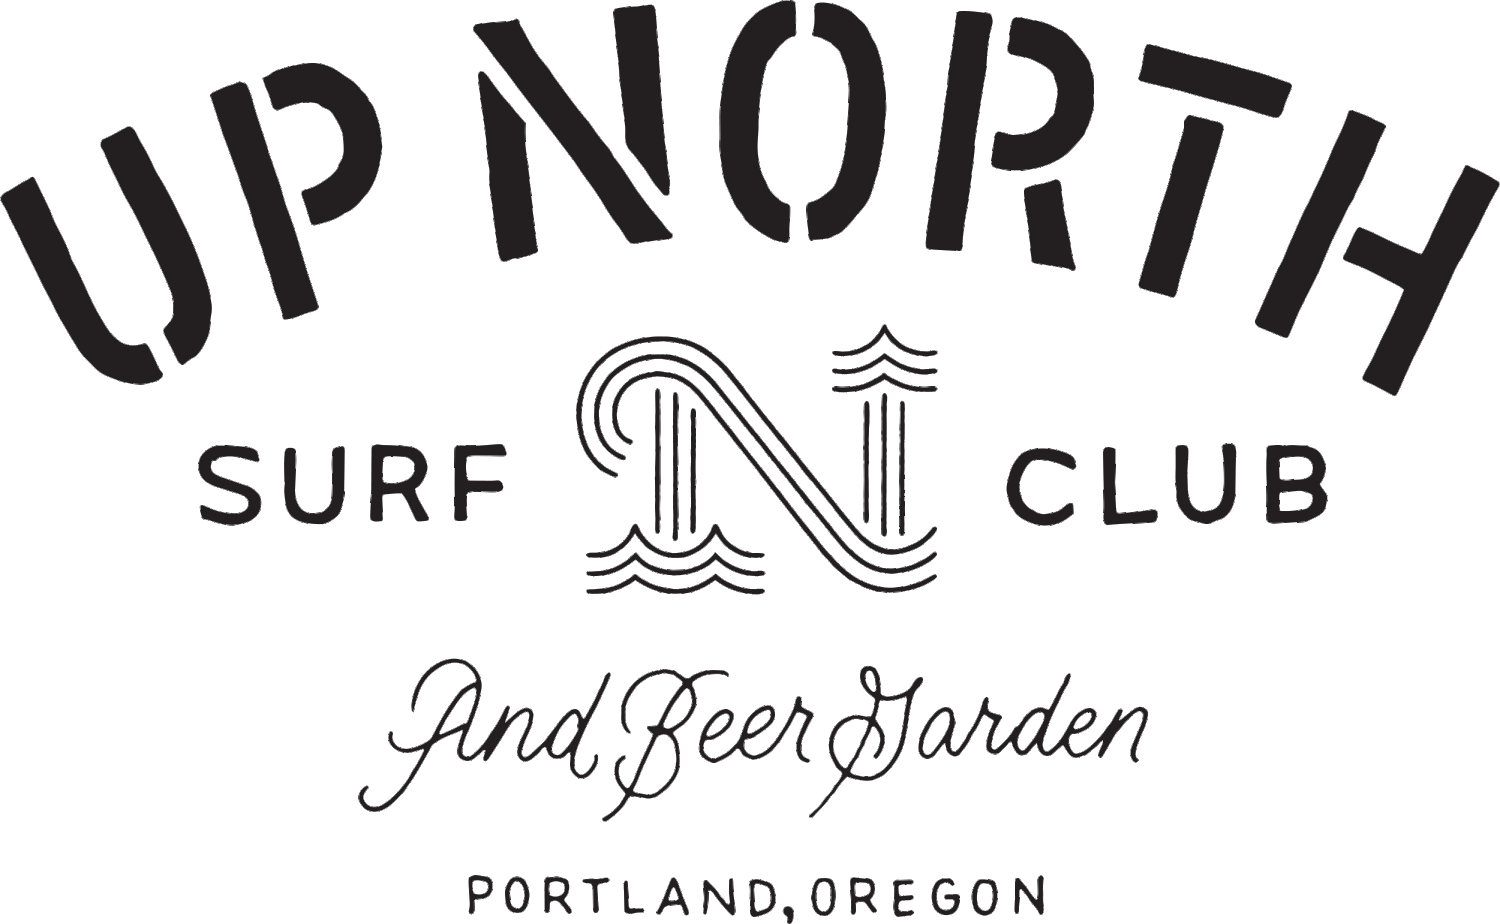 Up North Surf club